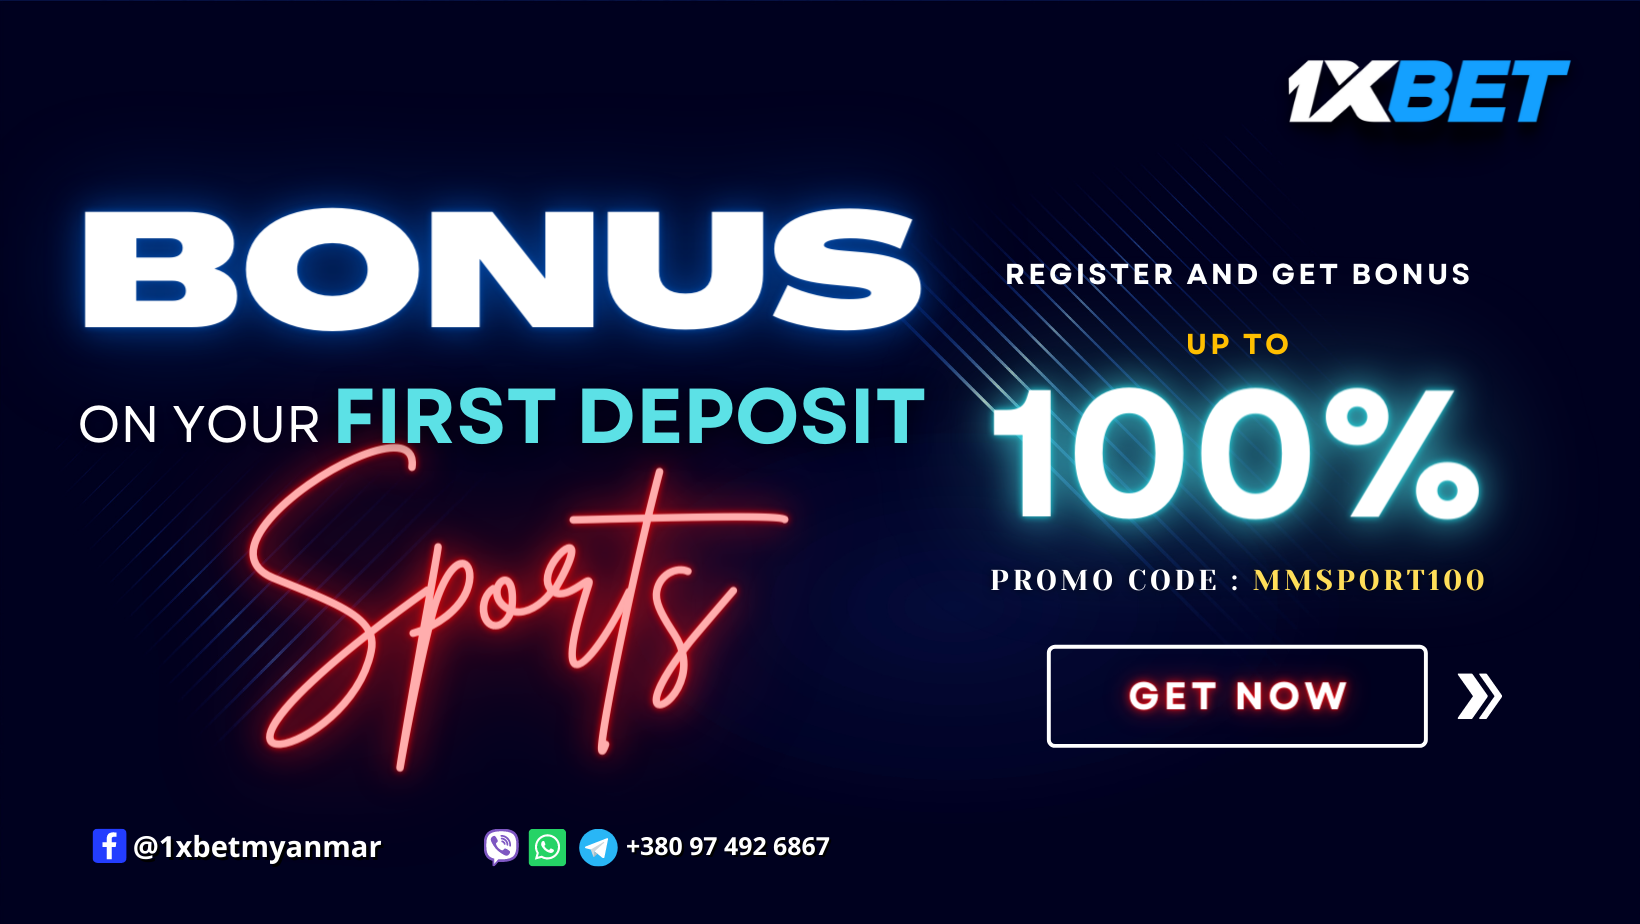 1xbit first deposit bonus